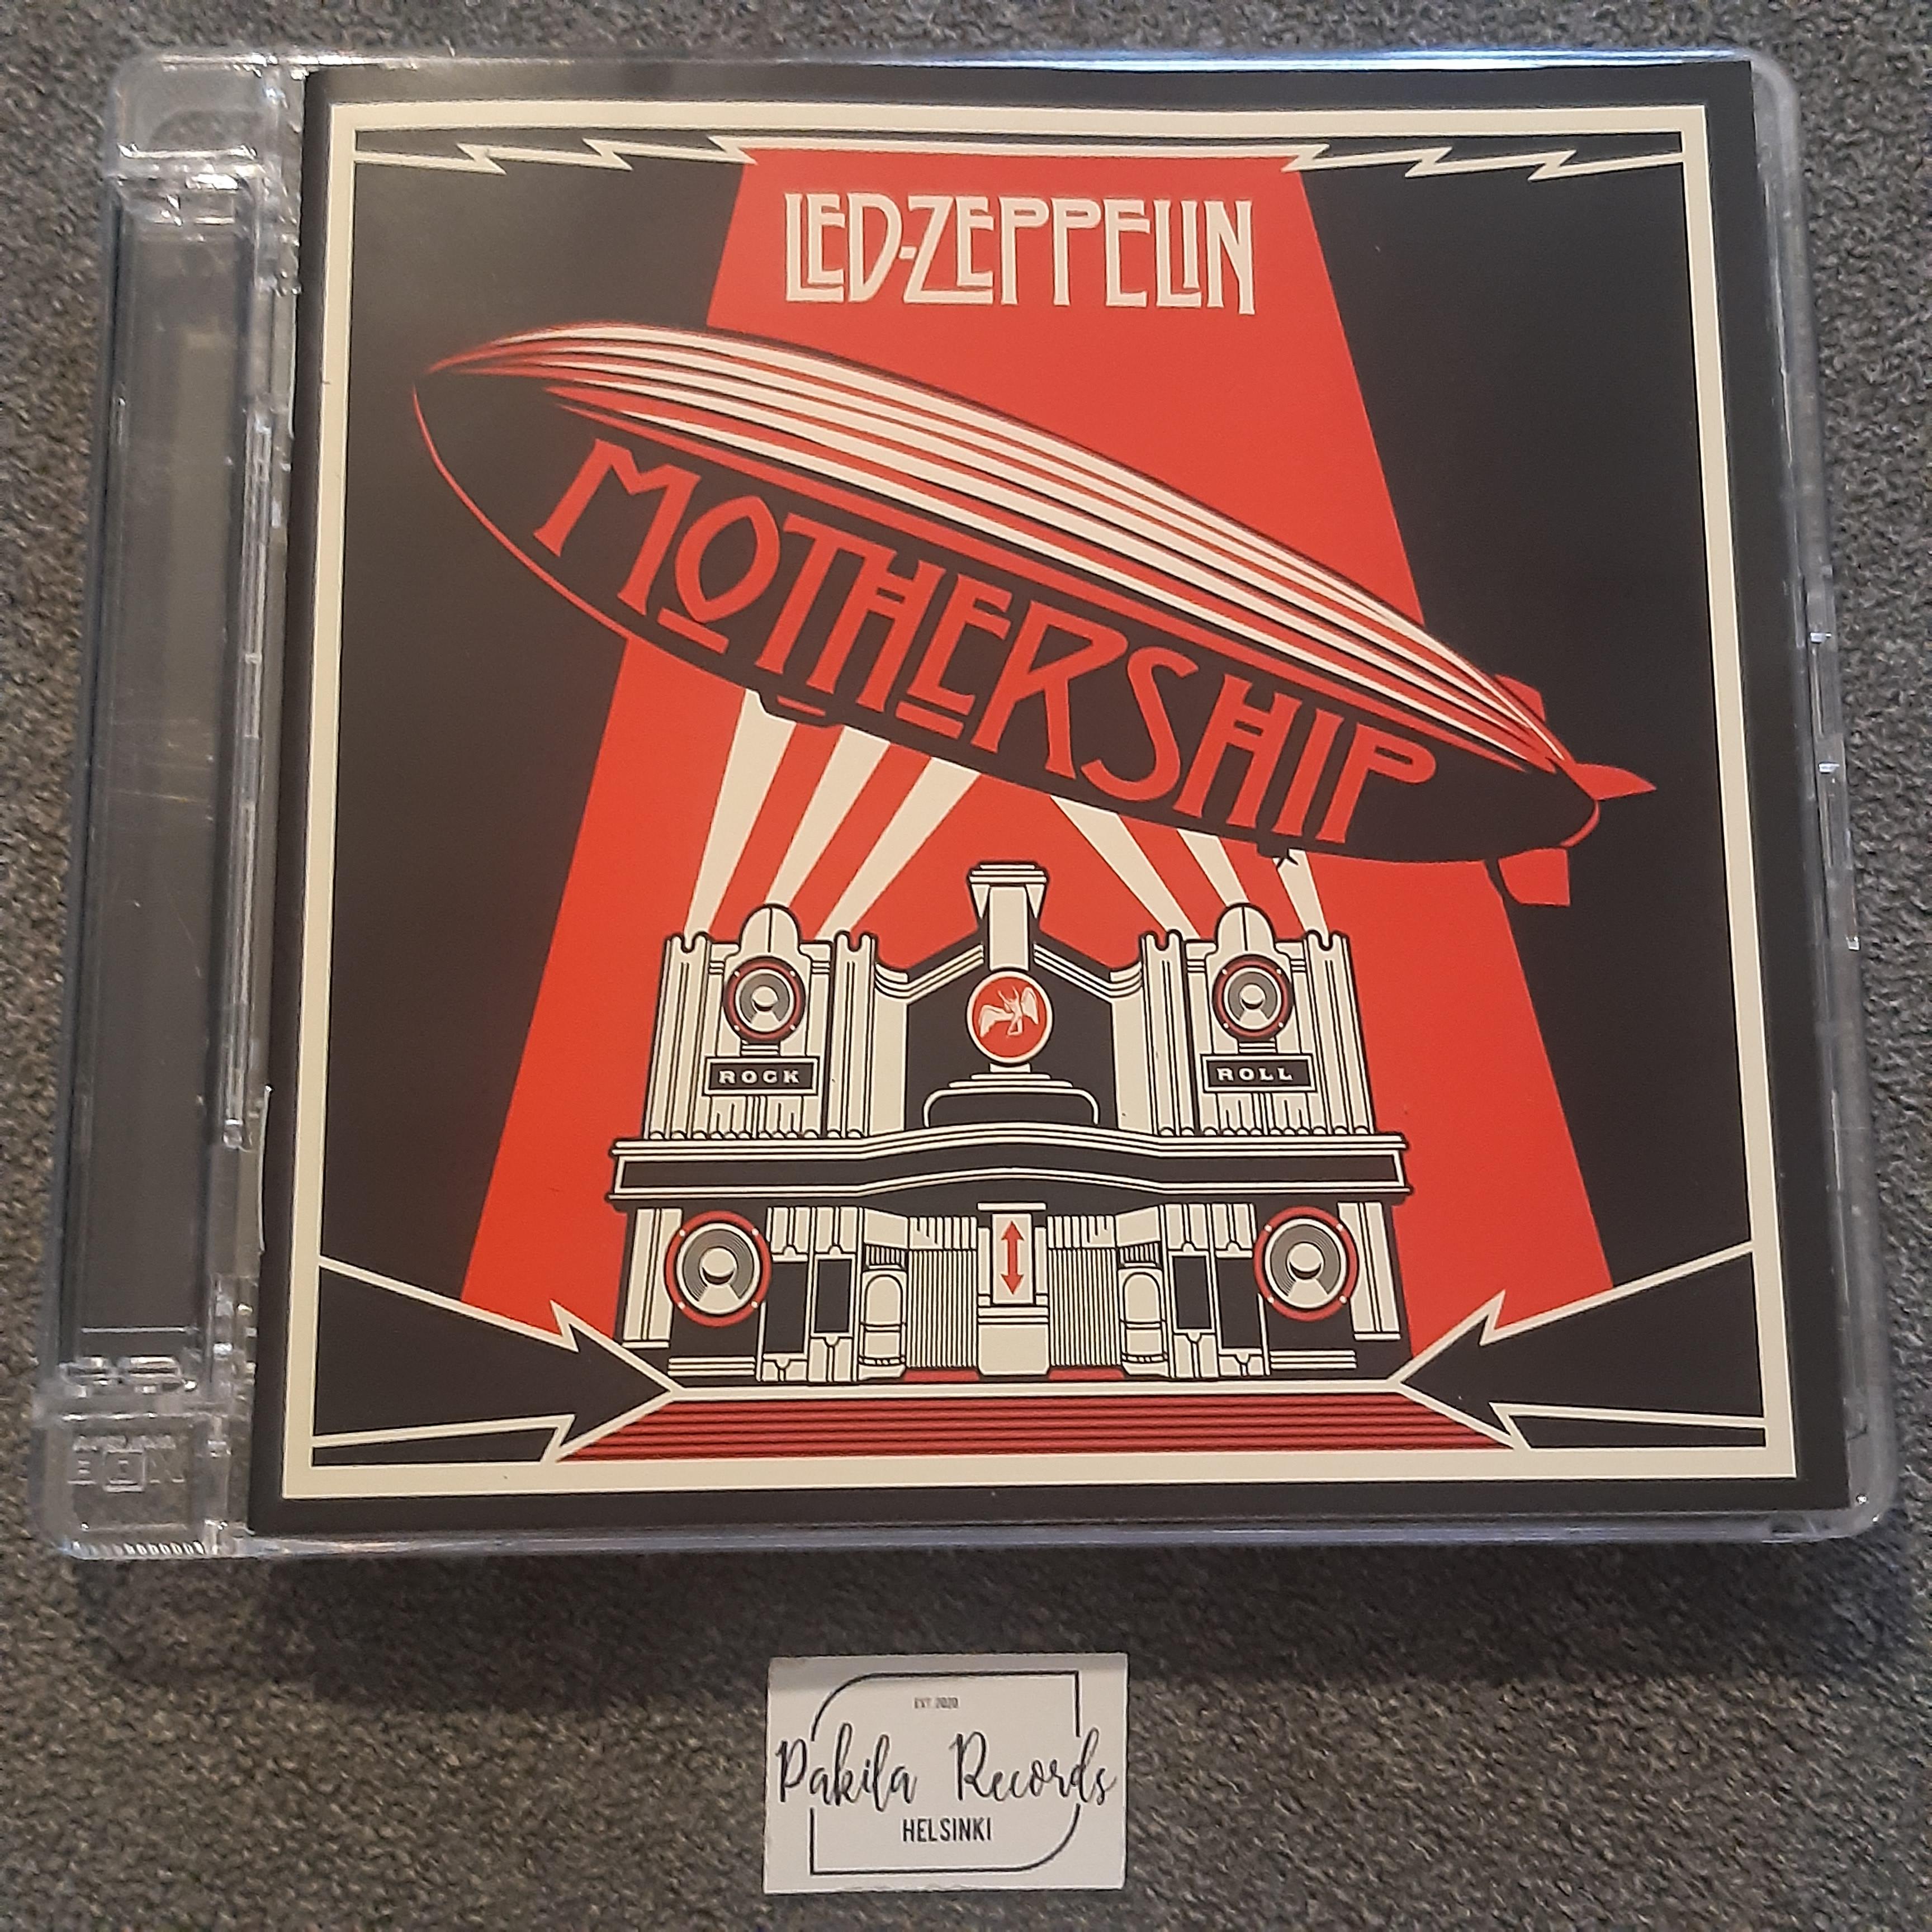 Led Zeppelin - Mothership - 2 CD (käytetty)